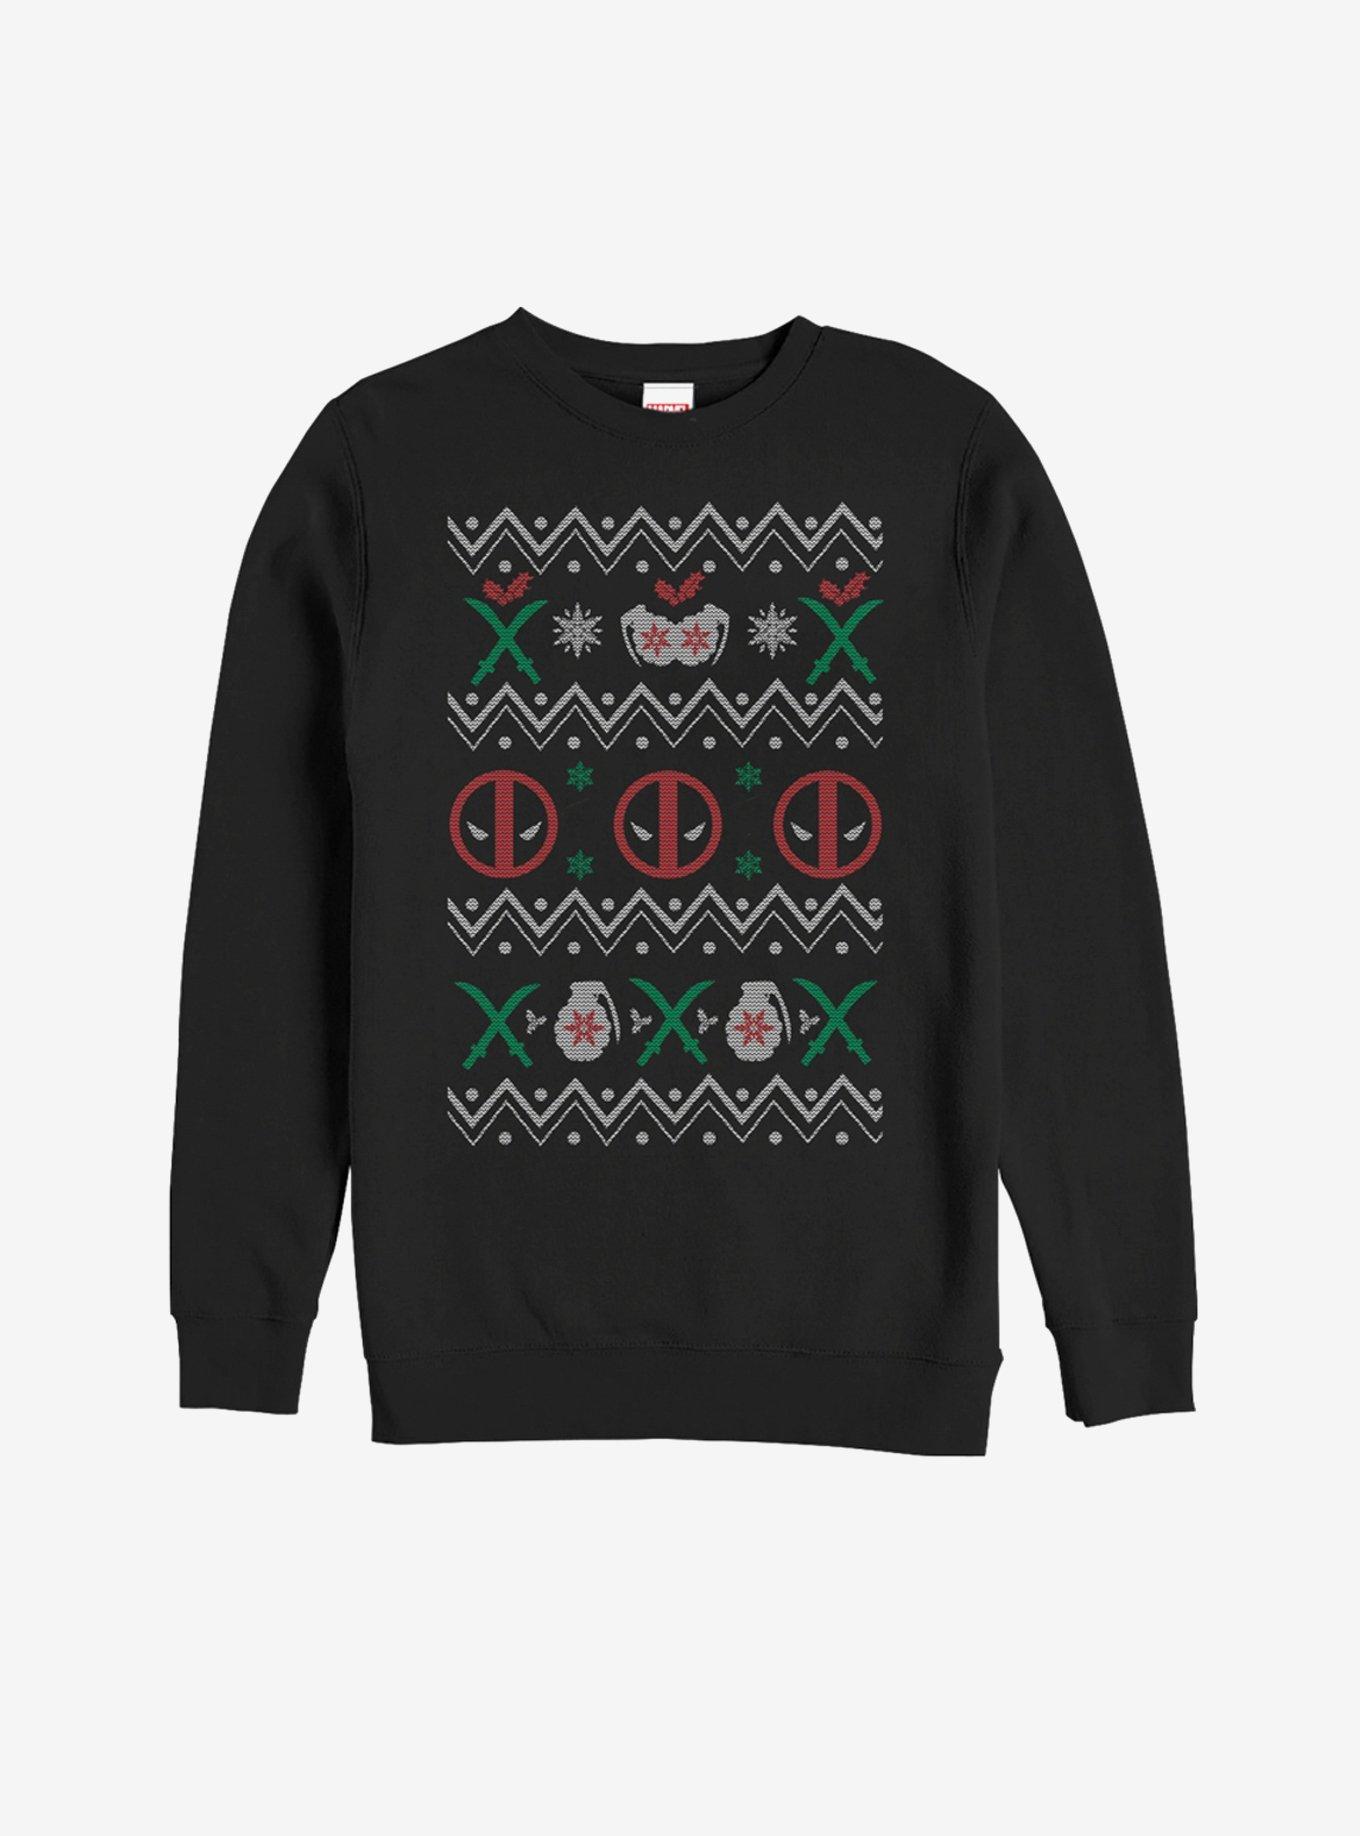 Marvel Deadpool Ugly Christmas Sweater Girls Sweatshirt, BLACK, hi-res